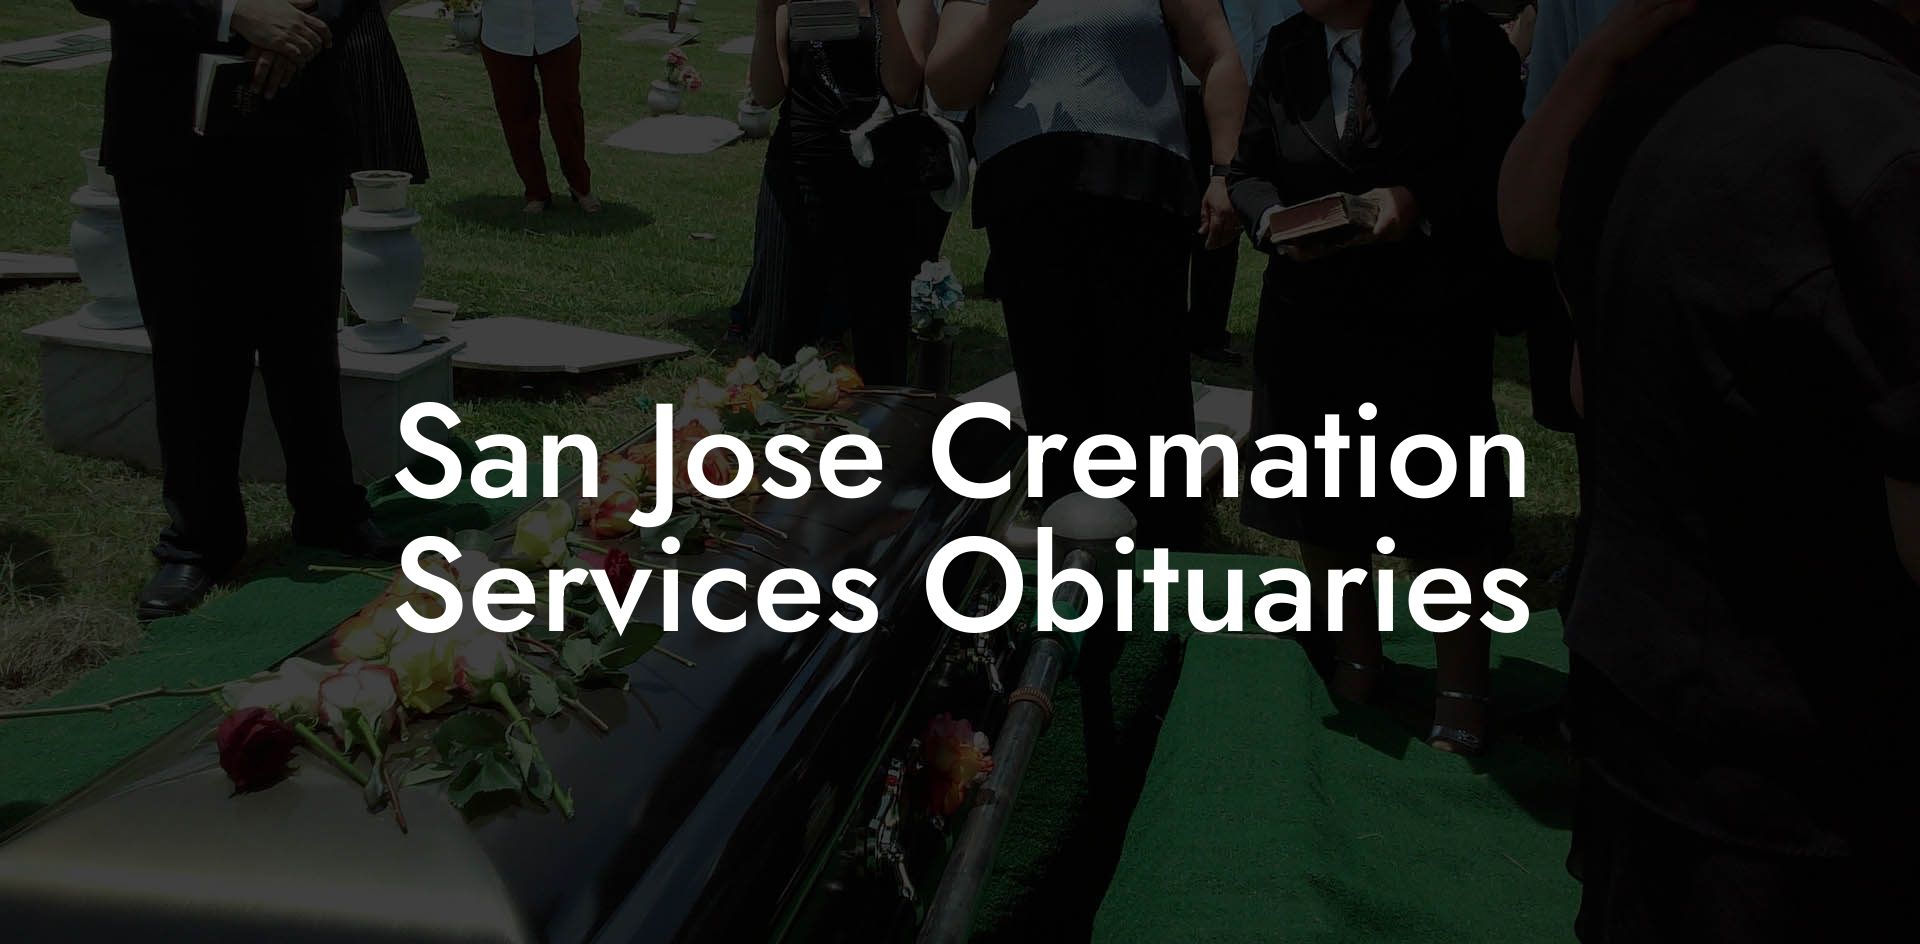 San Jose Cremation Services Obituaries